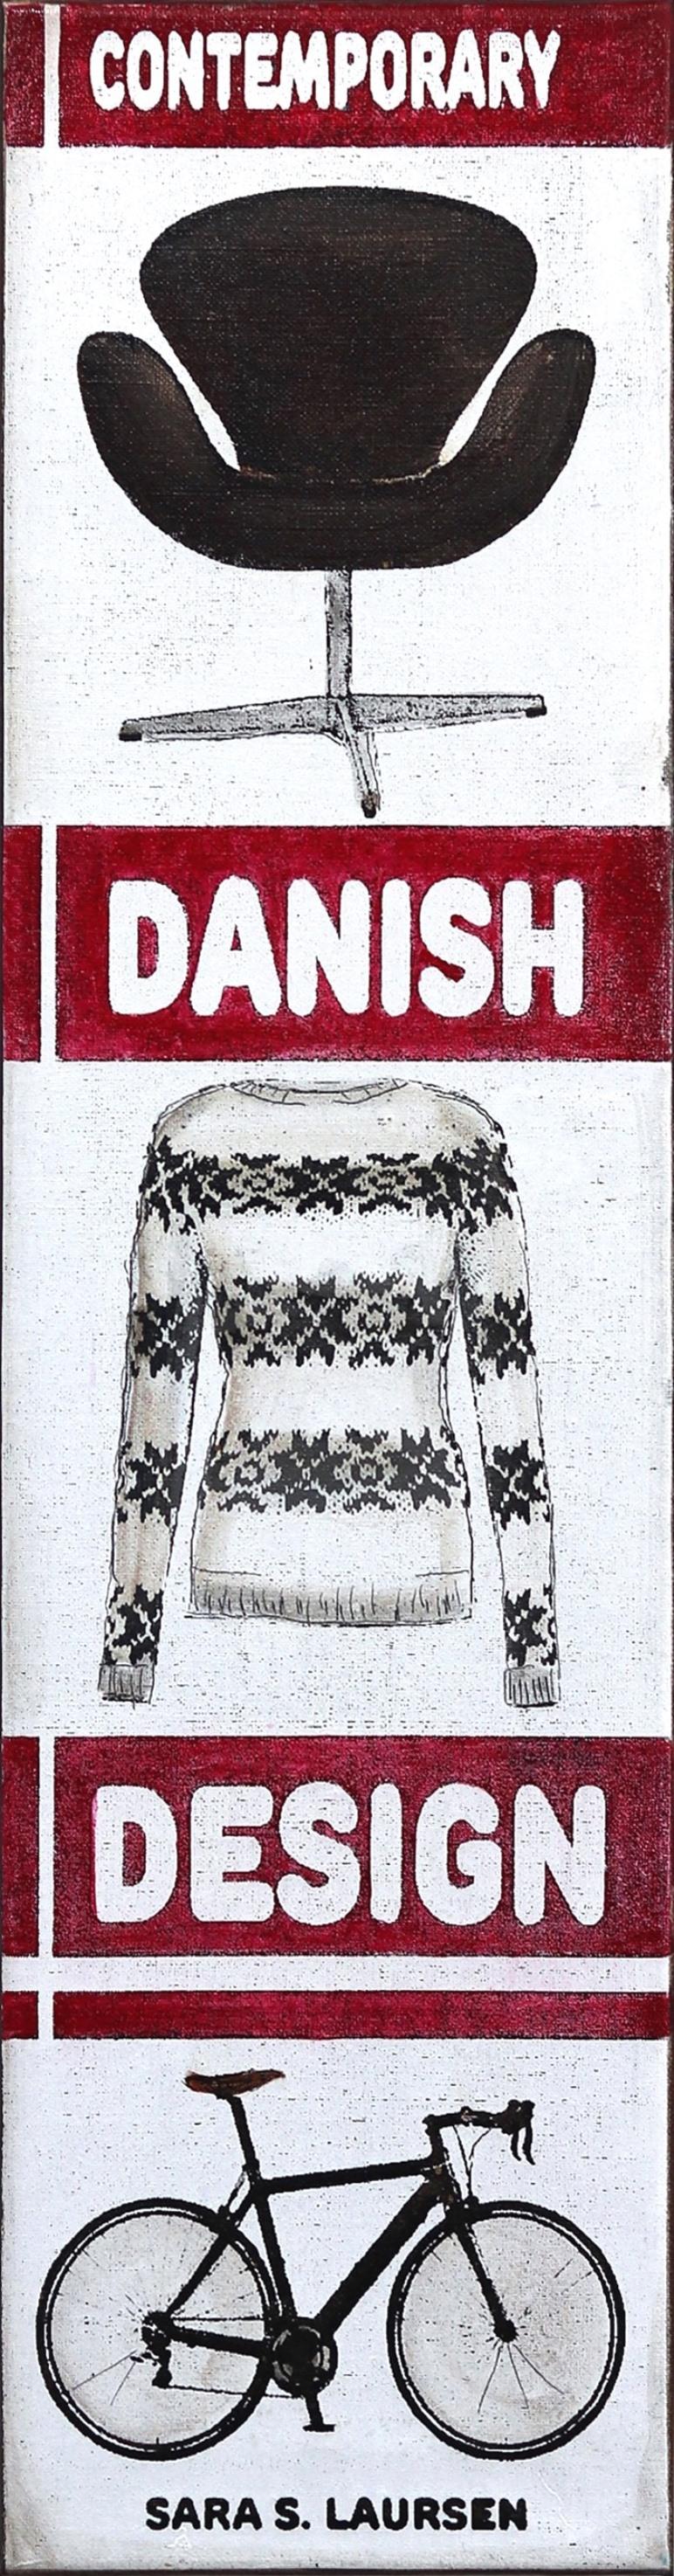 Danish Design - Original Mid Century Modern Book Artwork on Canvas